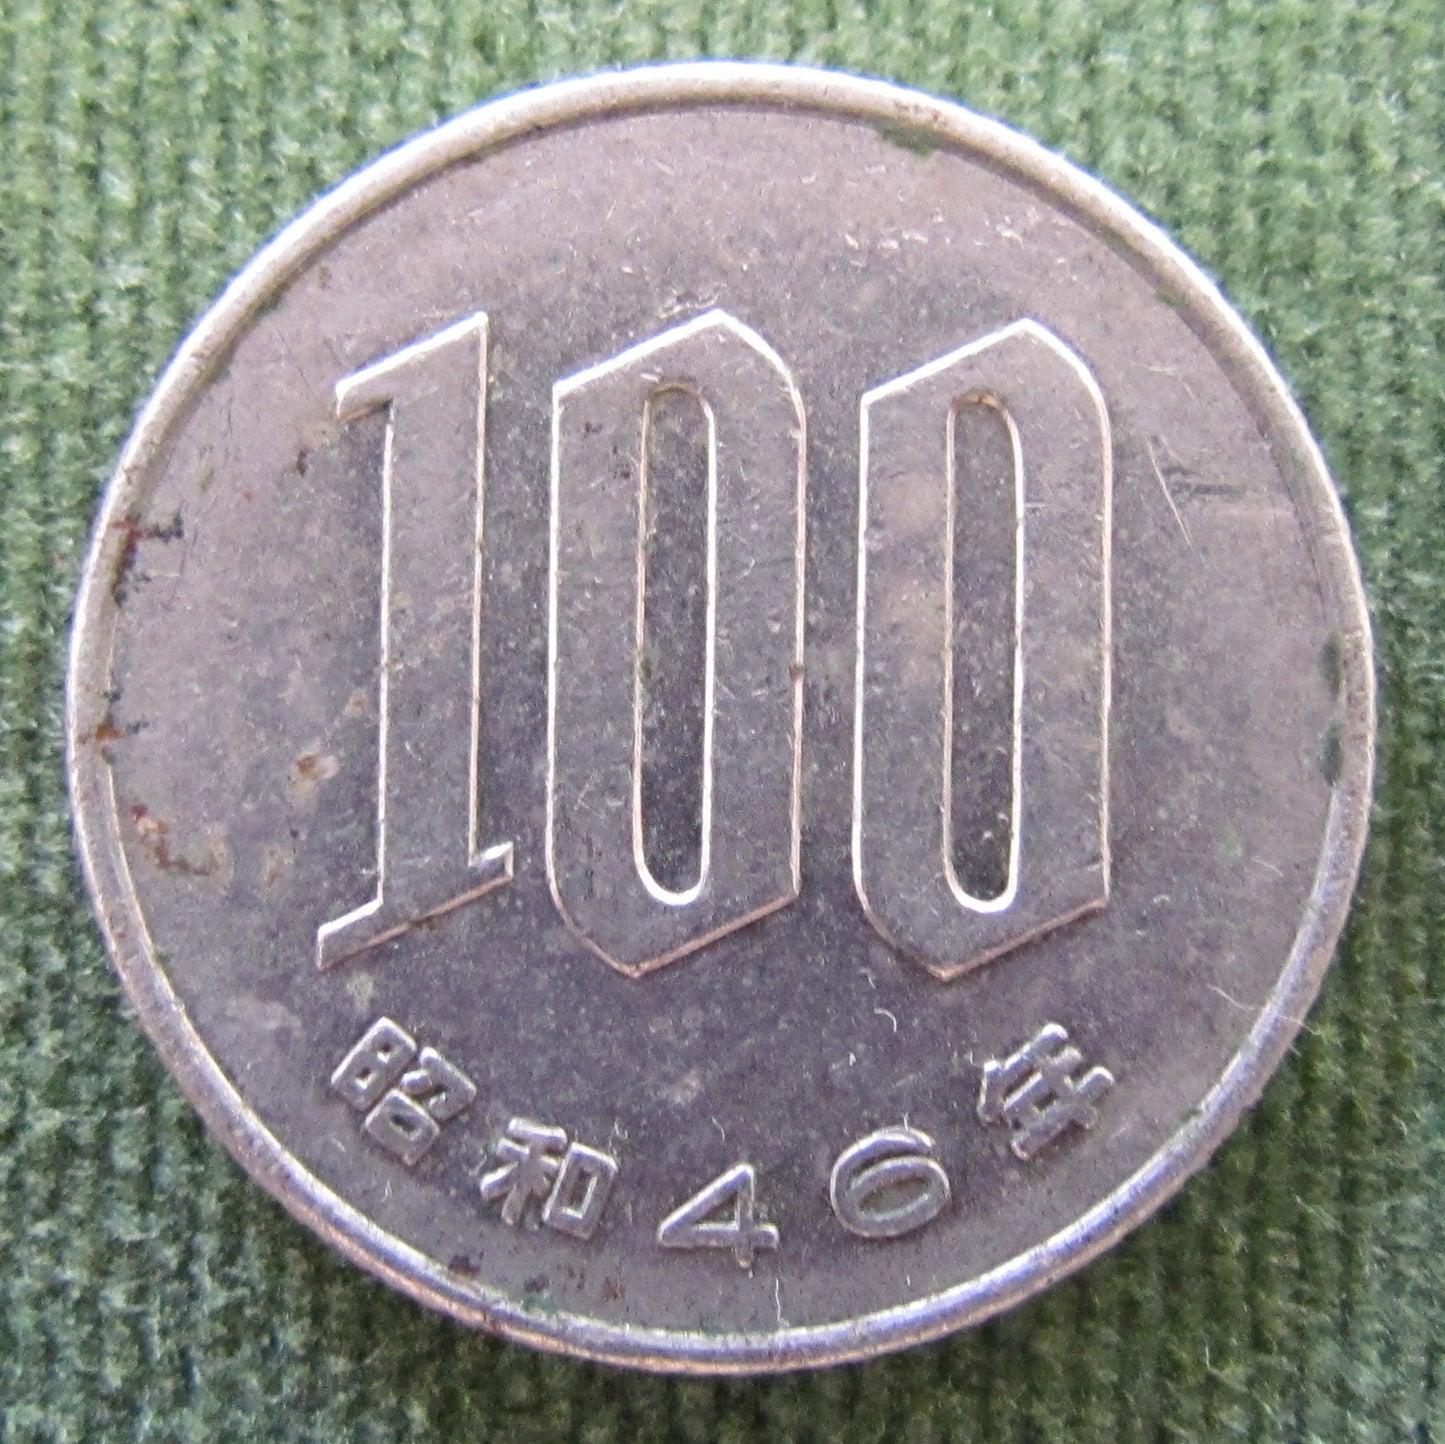 Japanese 1971 100 Yen Coin - Circulated